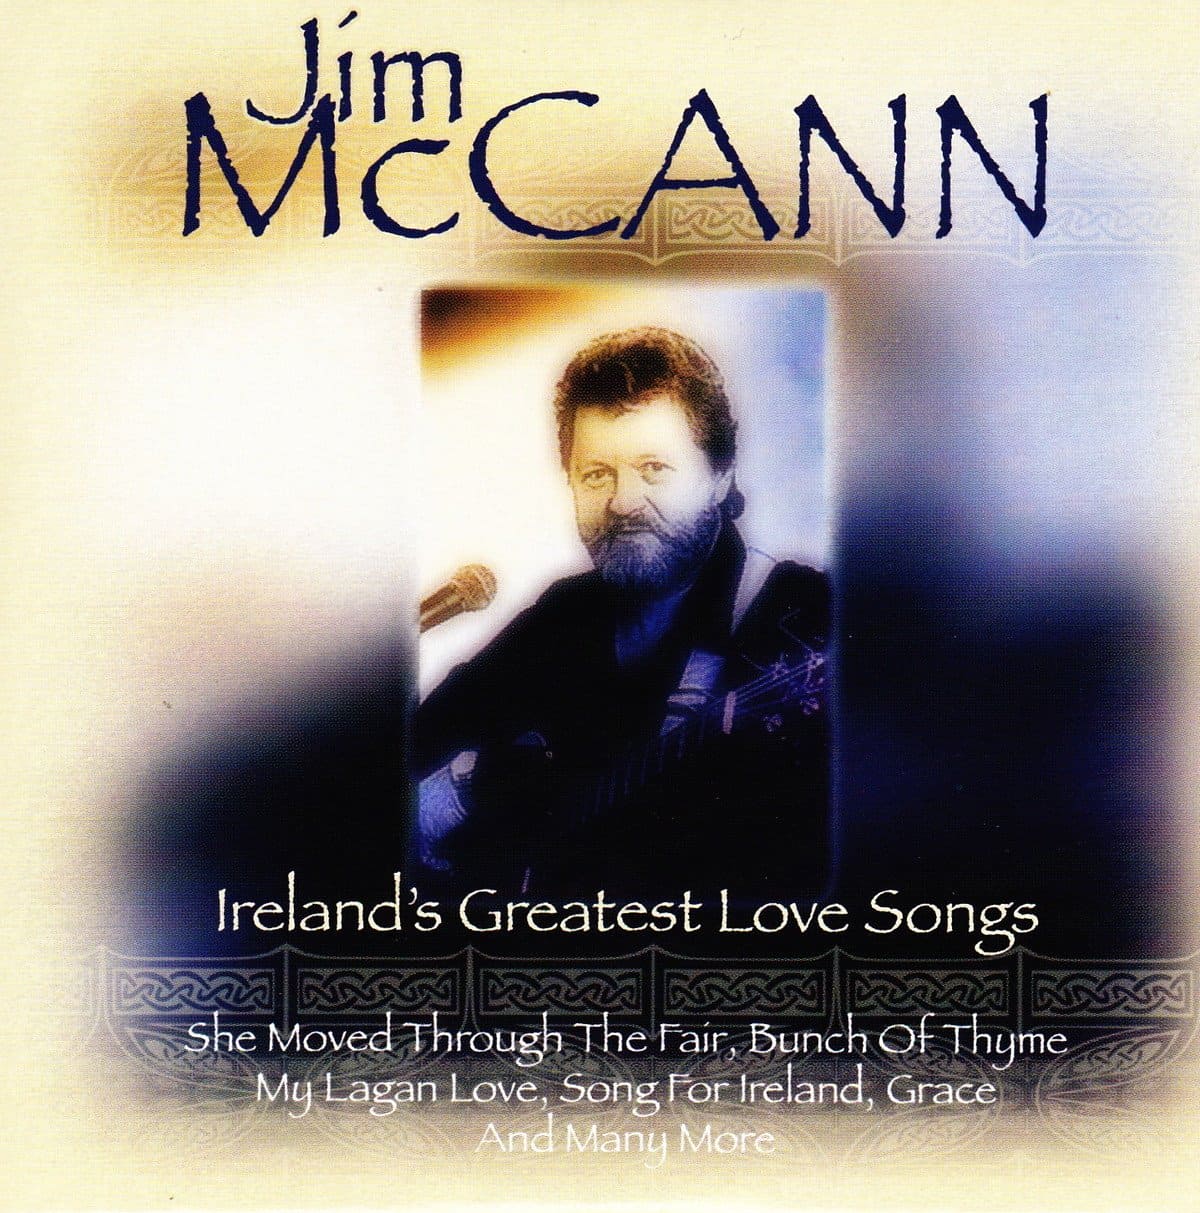 Ireland's Greatest Love Songs - Jim McCann [CD]